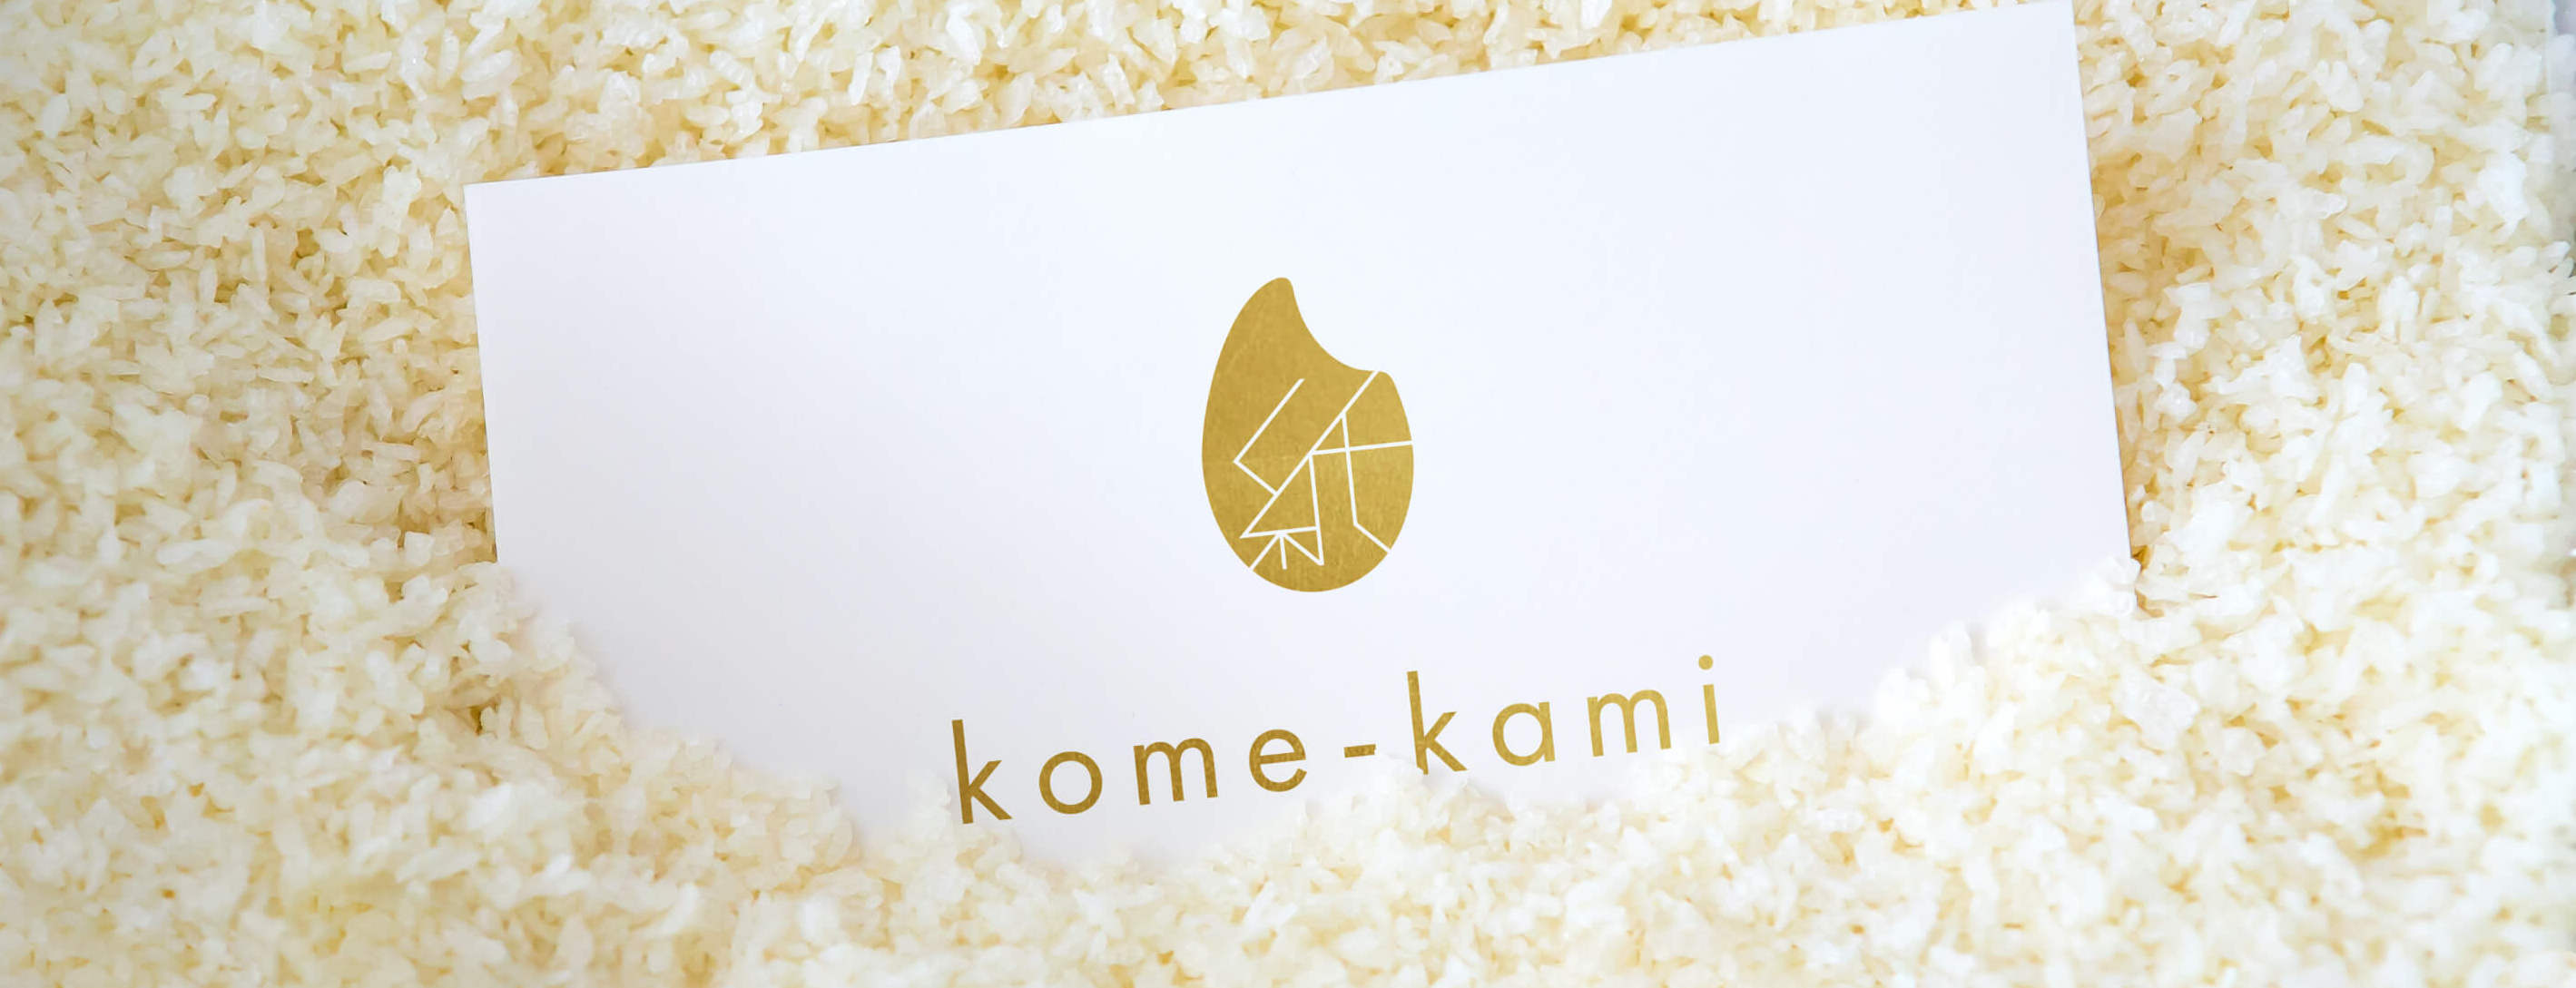 kome-kamiの商品画像